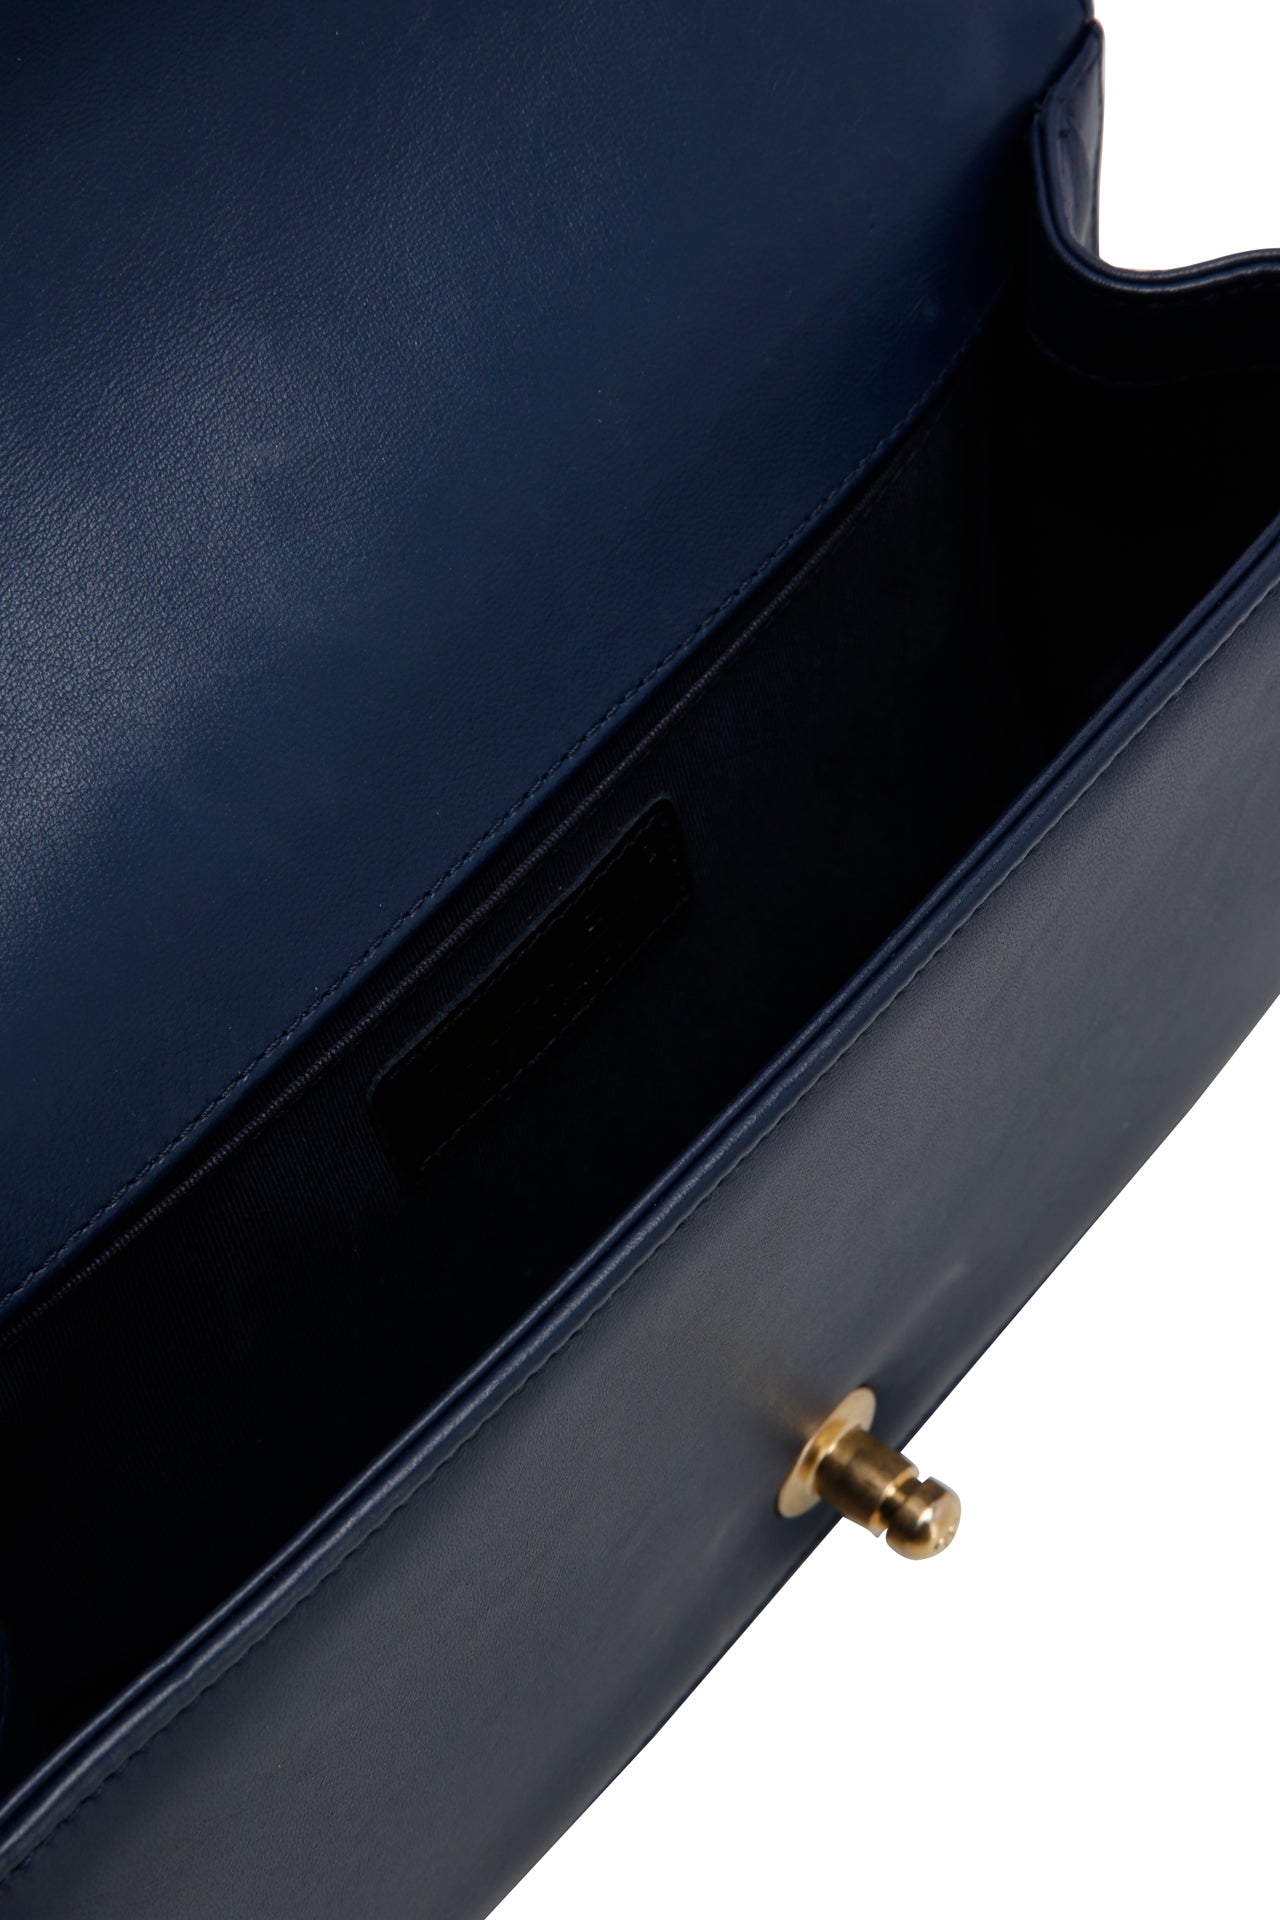 Chanel Calfskin & Gold Tone Finish Metal Navy Blue Boy Bag